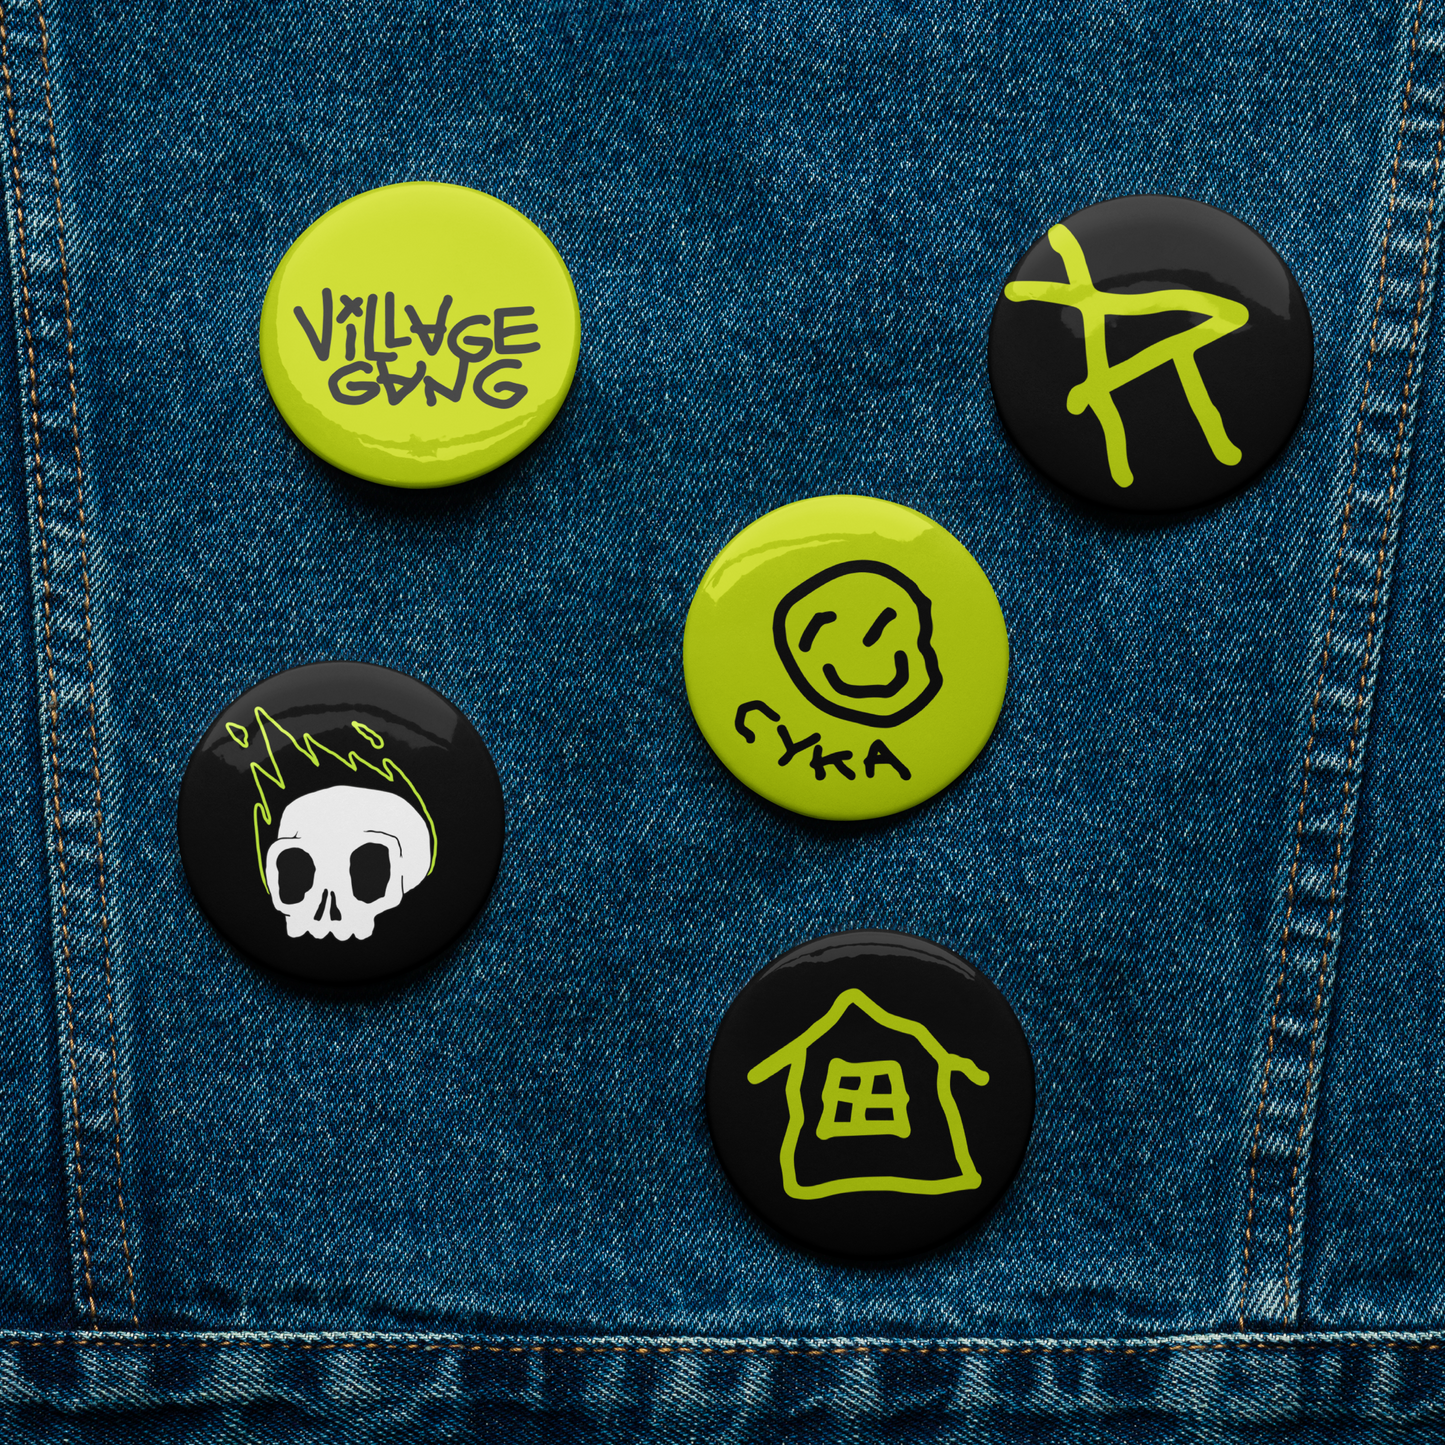 Super cool Village Gang pins